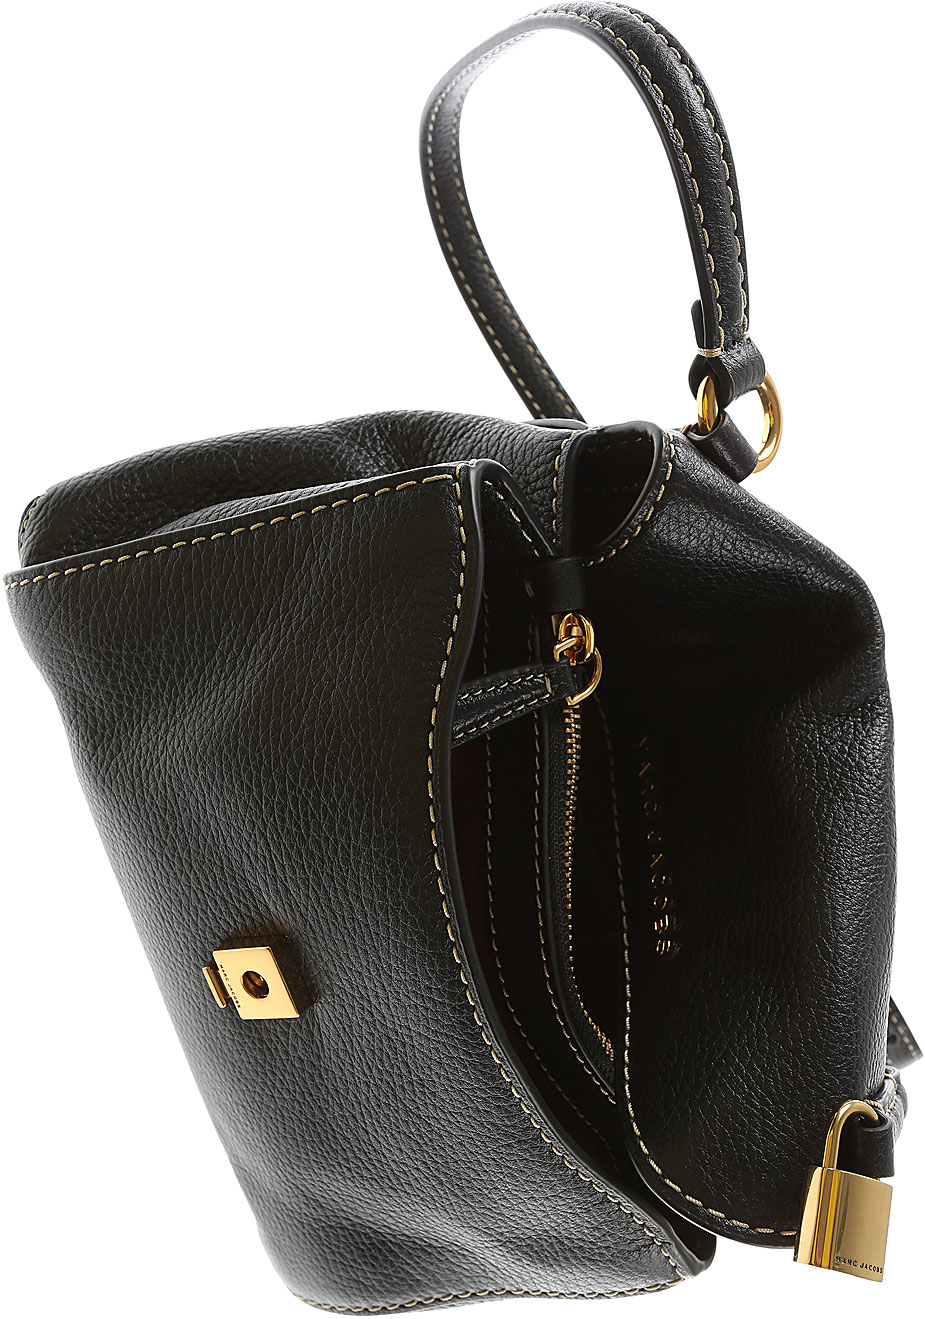 Handbags Marc Jacobs, Style code: m0013610-065-A509